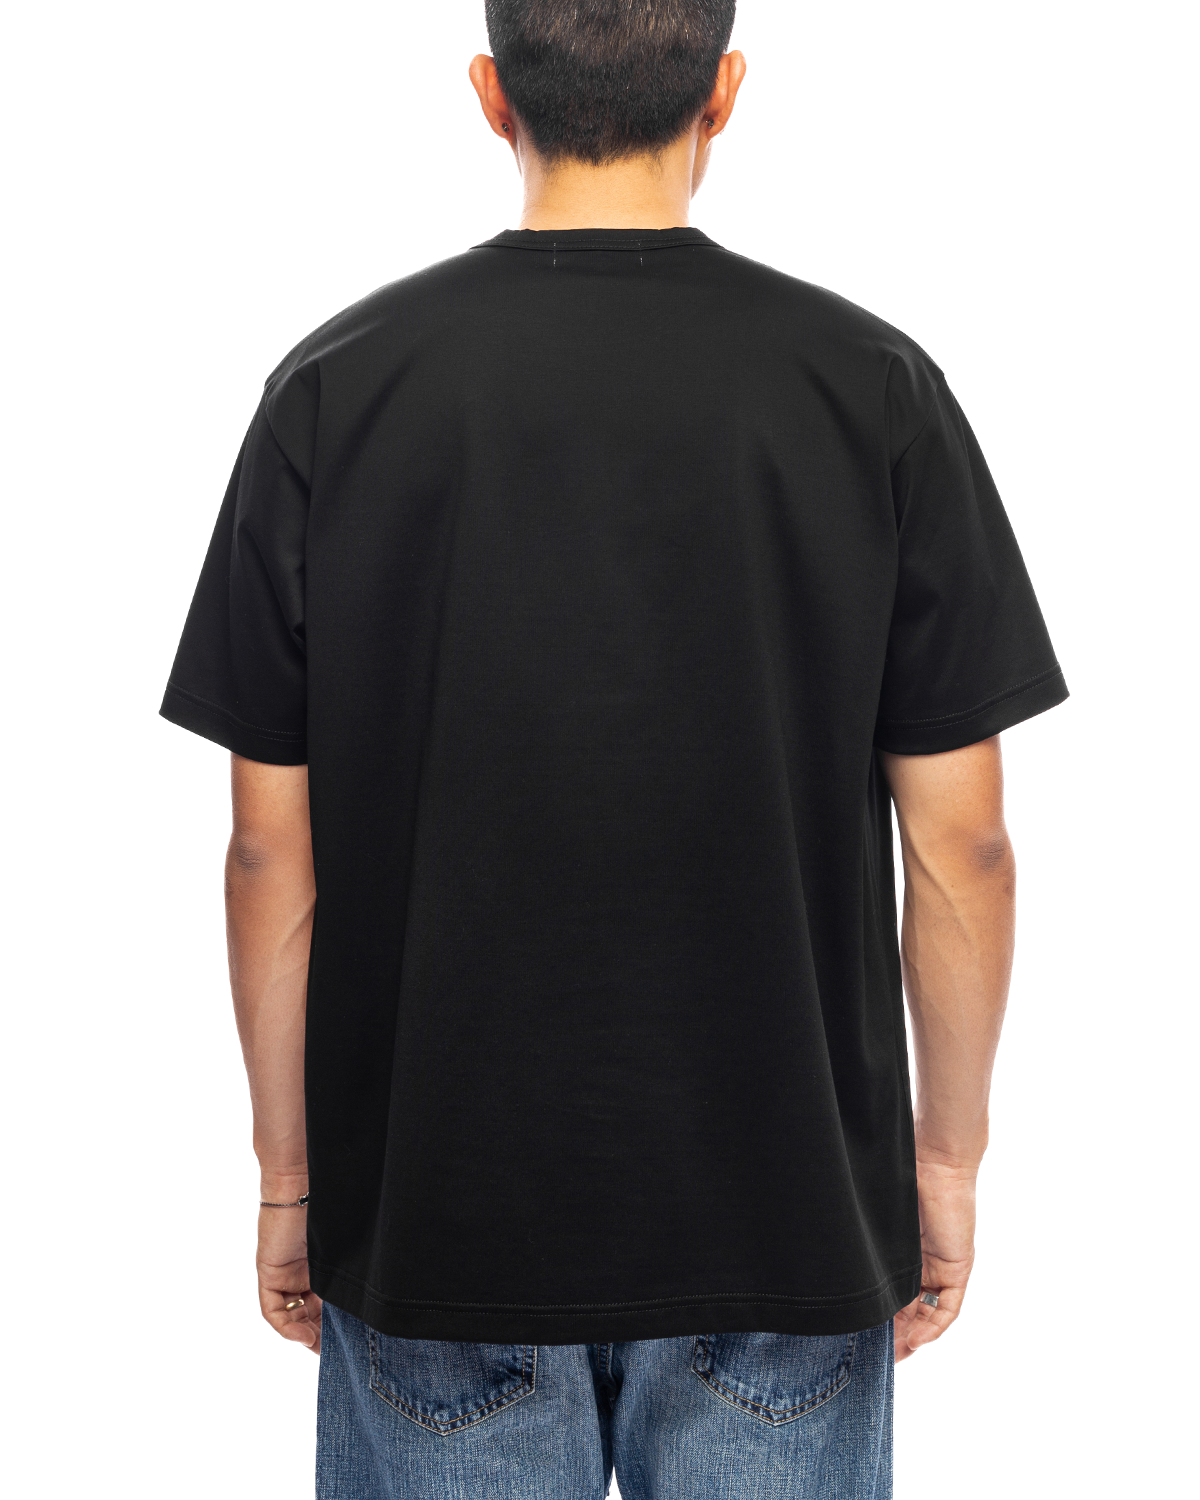 eYe Graphic T Shirt Black